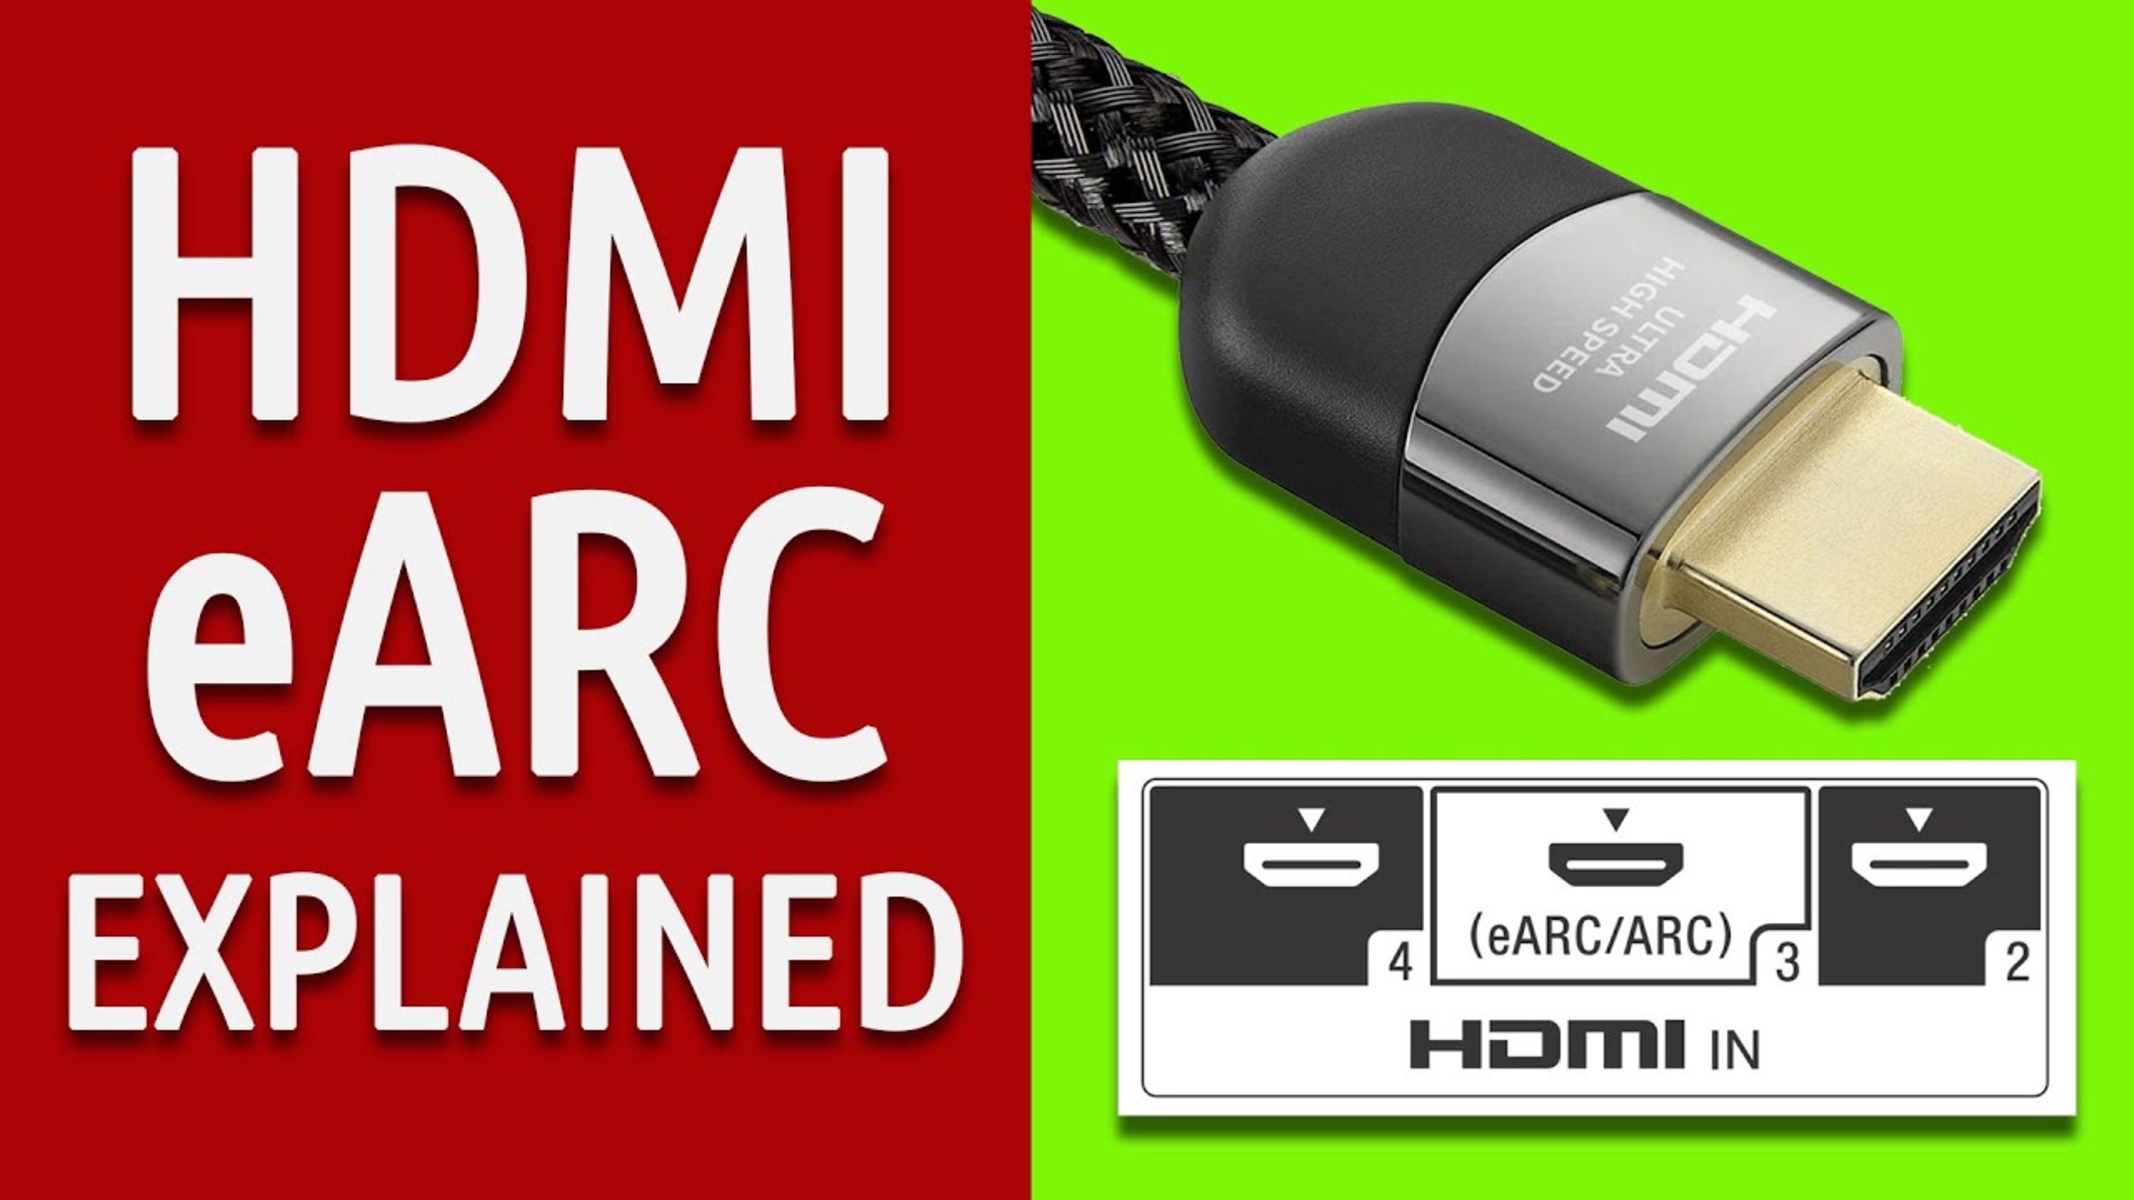 What Is HDMI E Arc